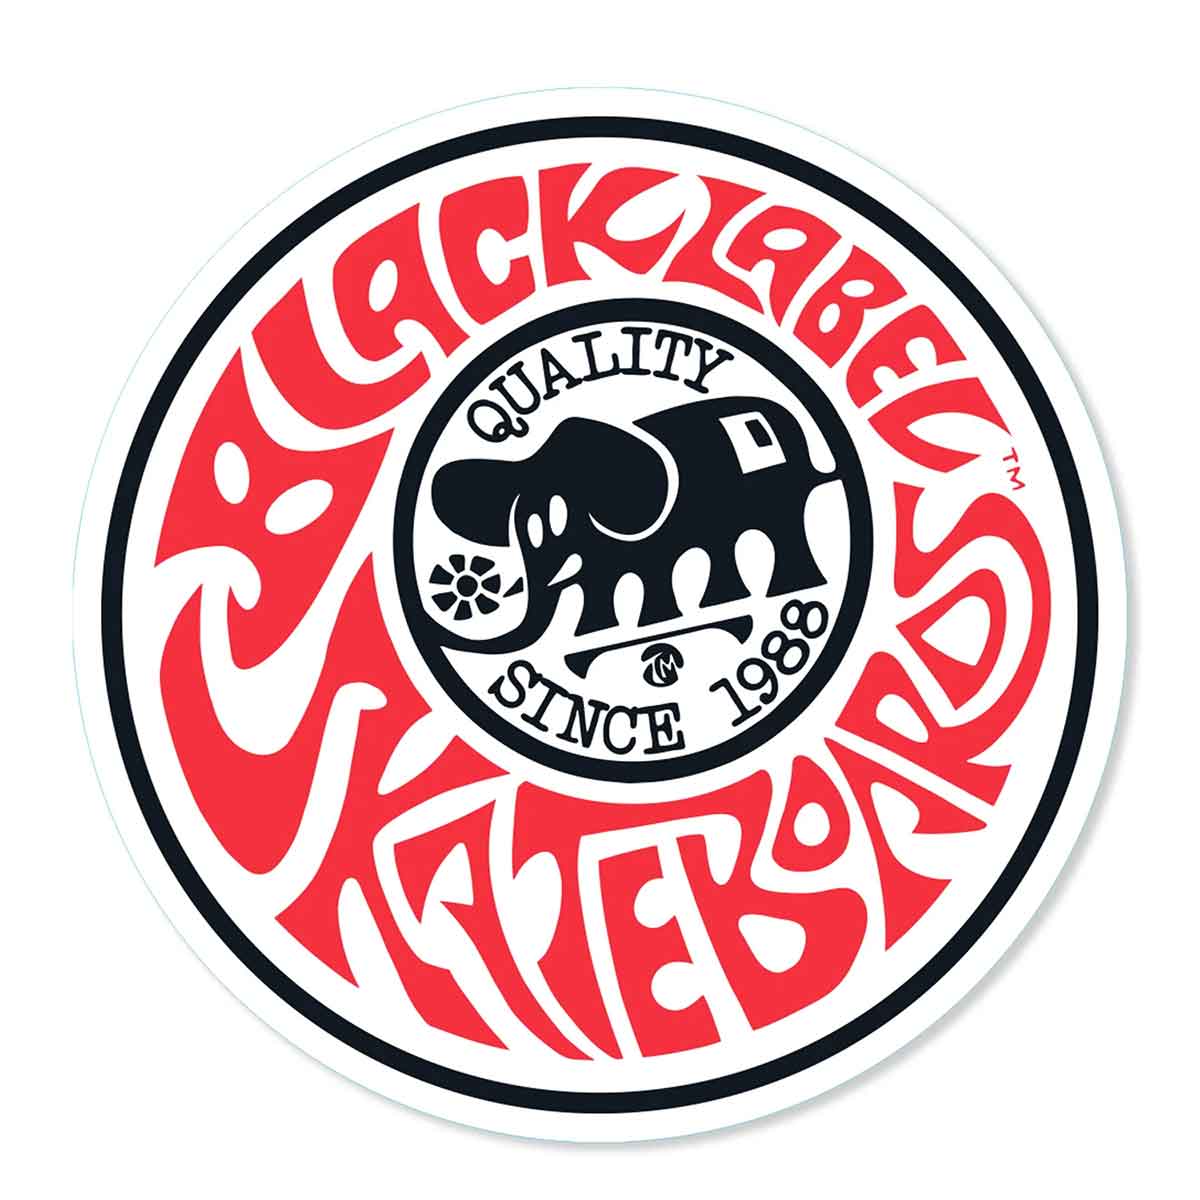 File:The Black Label logo.svg - Wikipedia